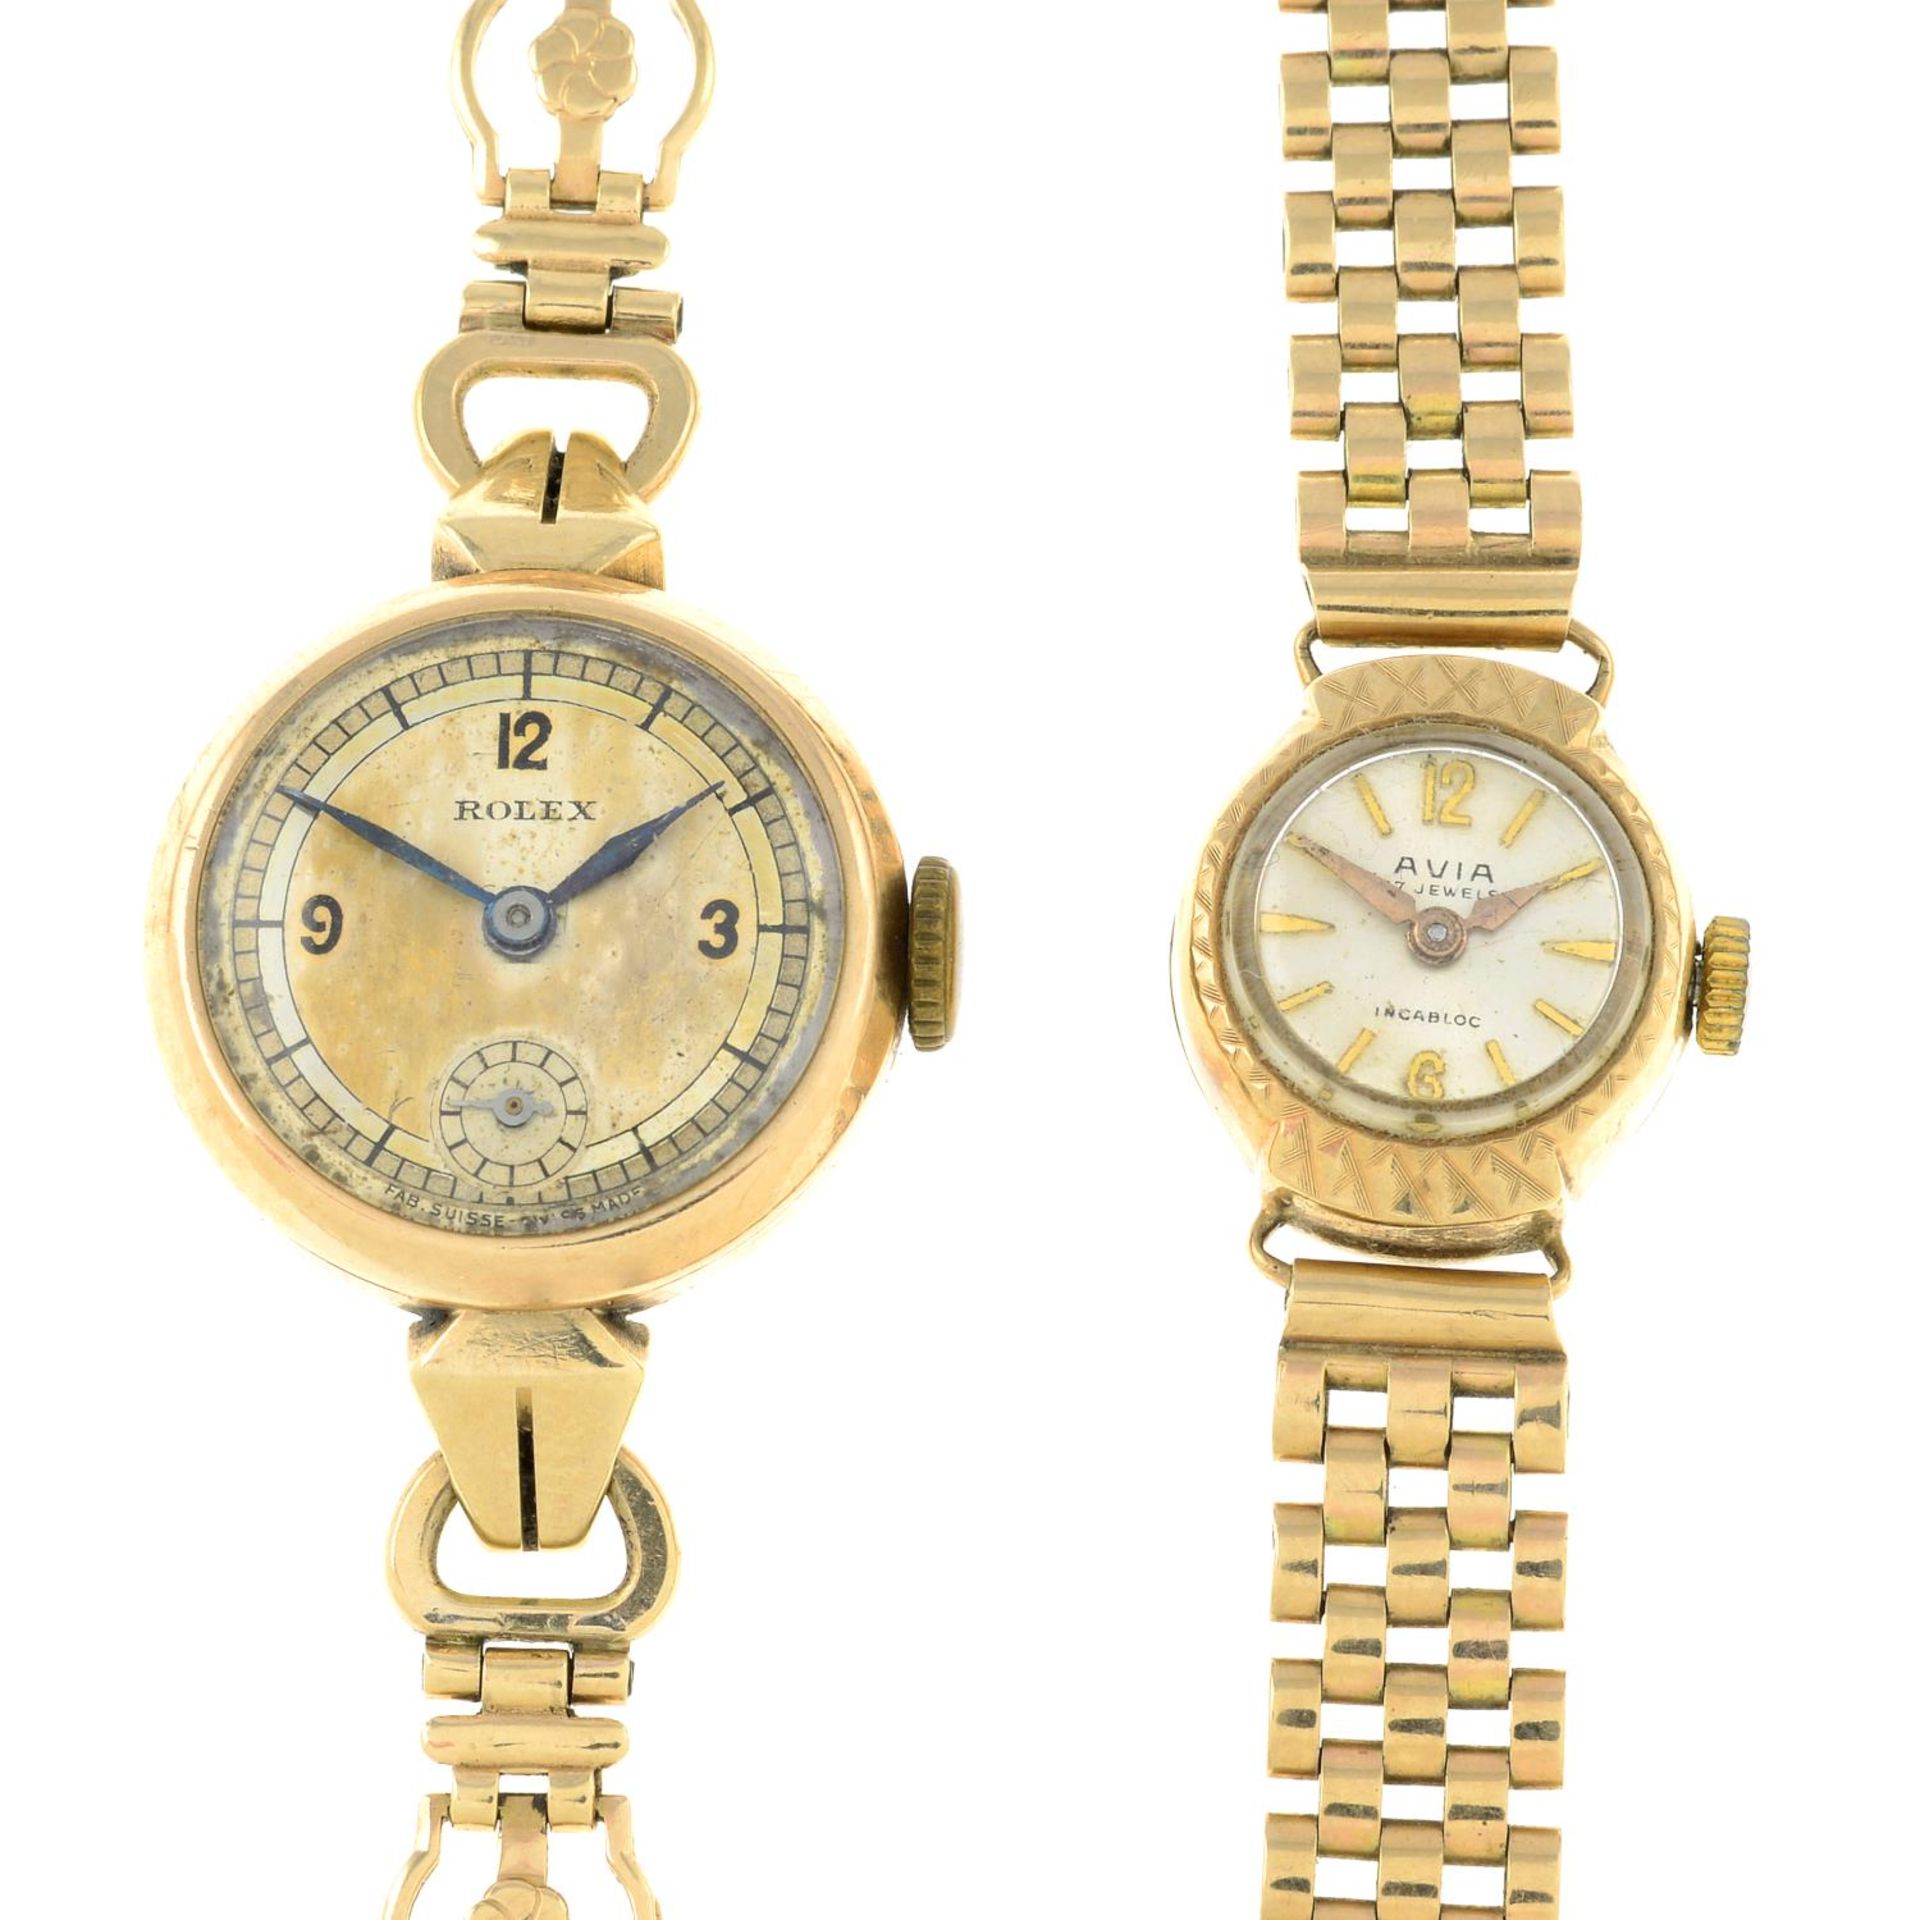 9ct gold wristwatch,